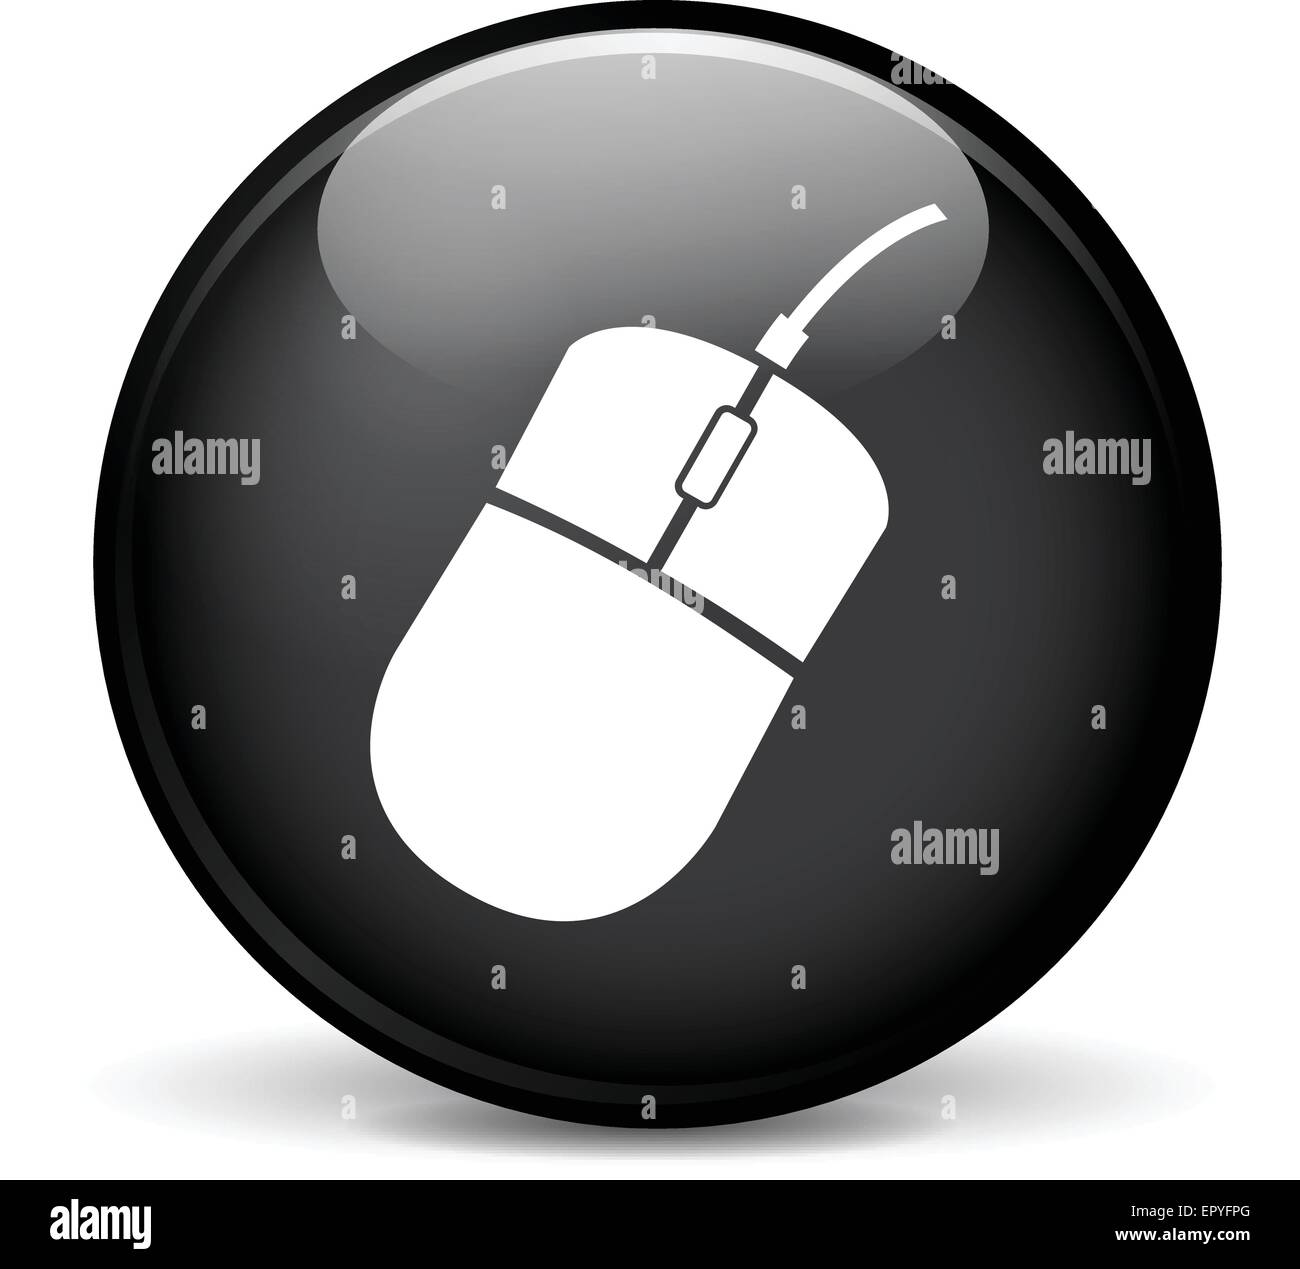 Illustration of mouse modern design black sphere icon Stock Vector